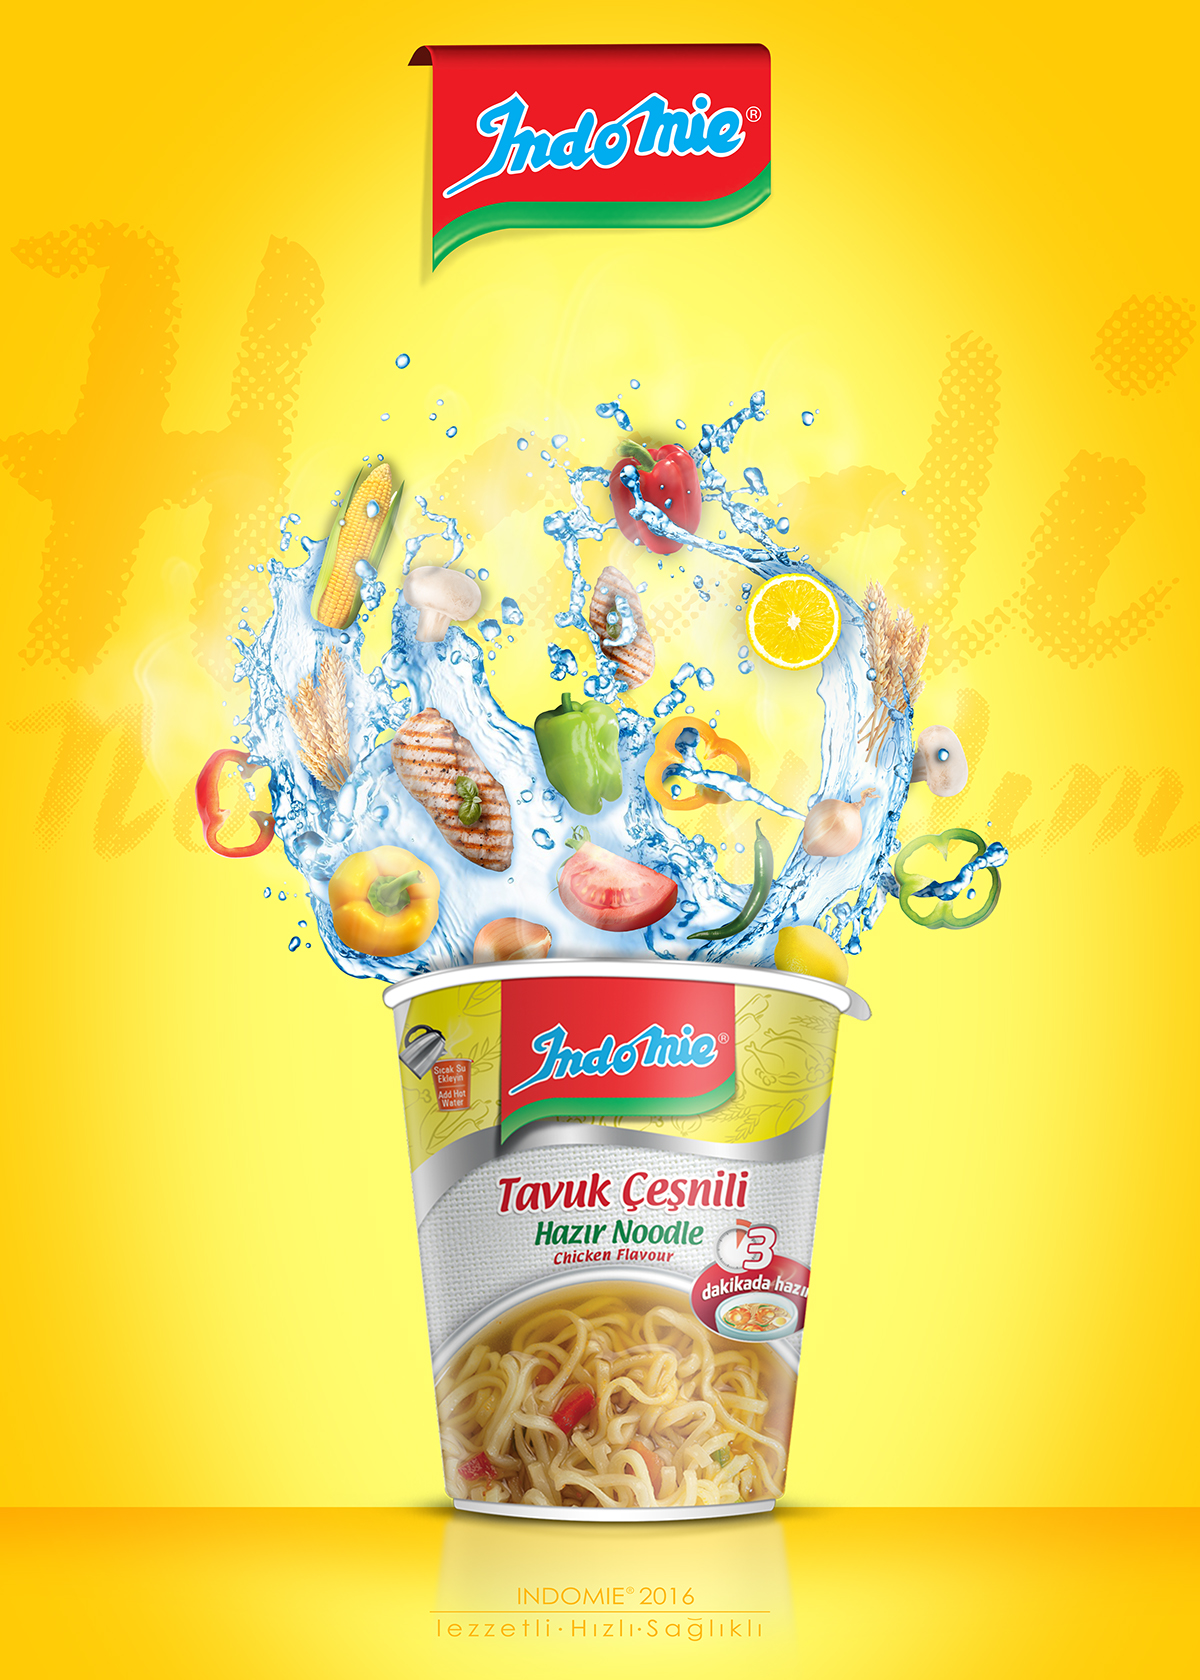 #graphic #Design #Noodles #food    #indomie @Advertising